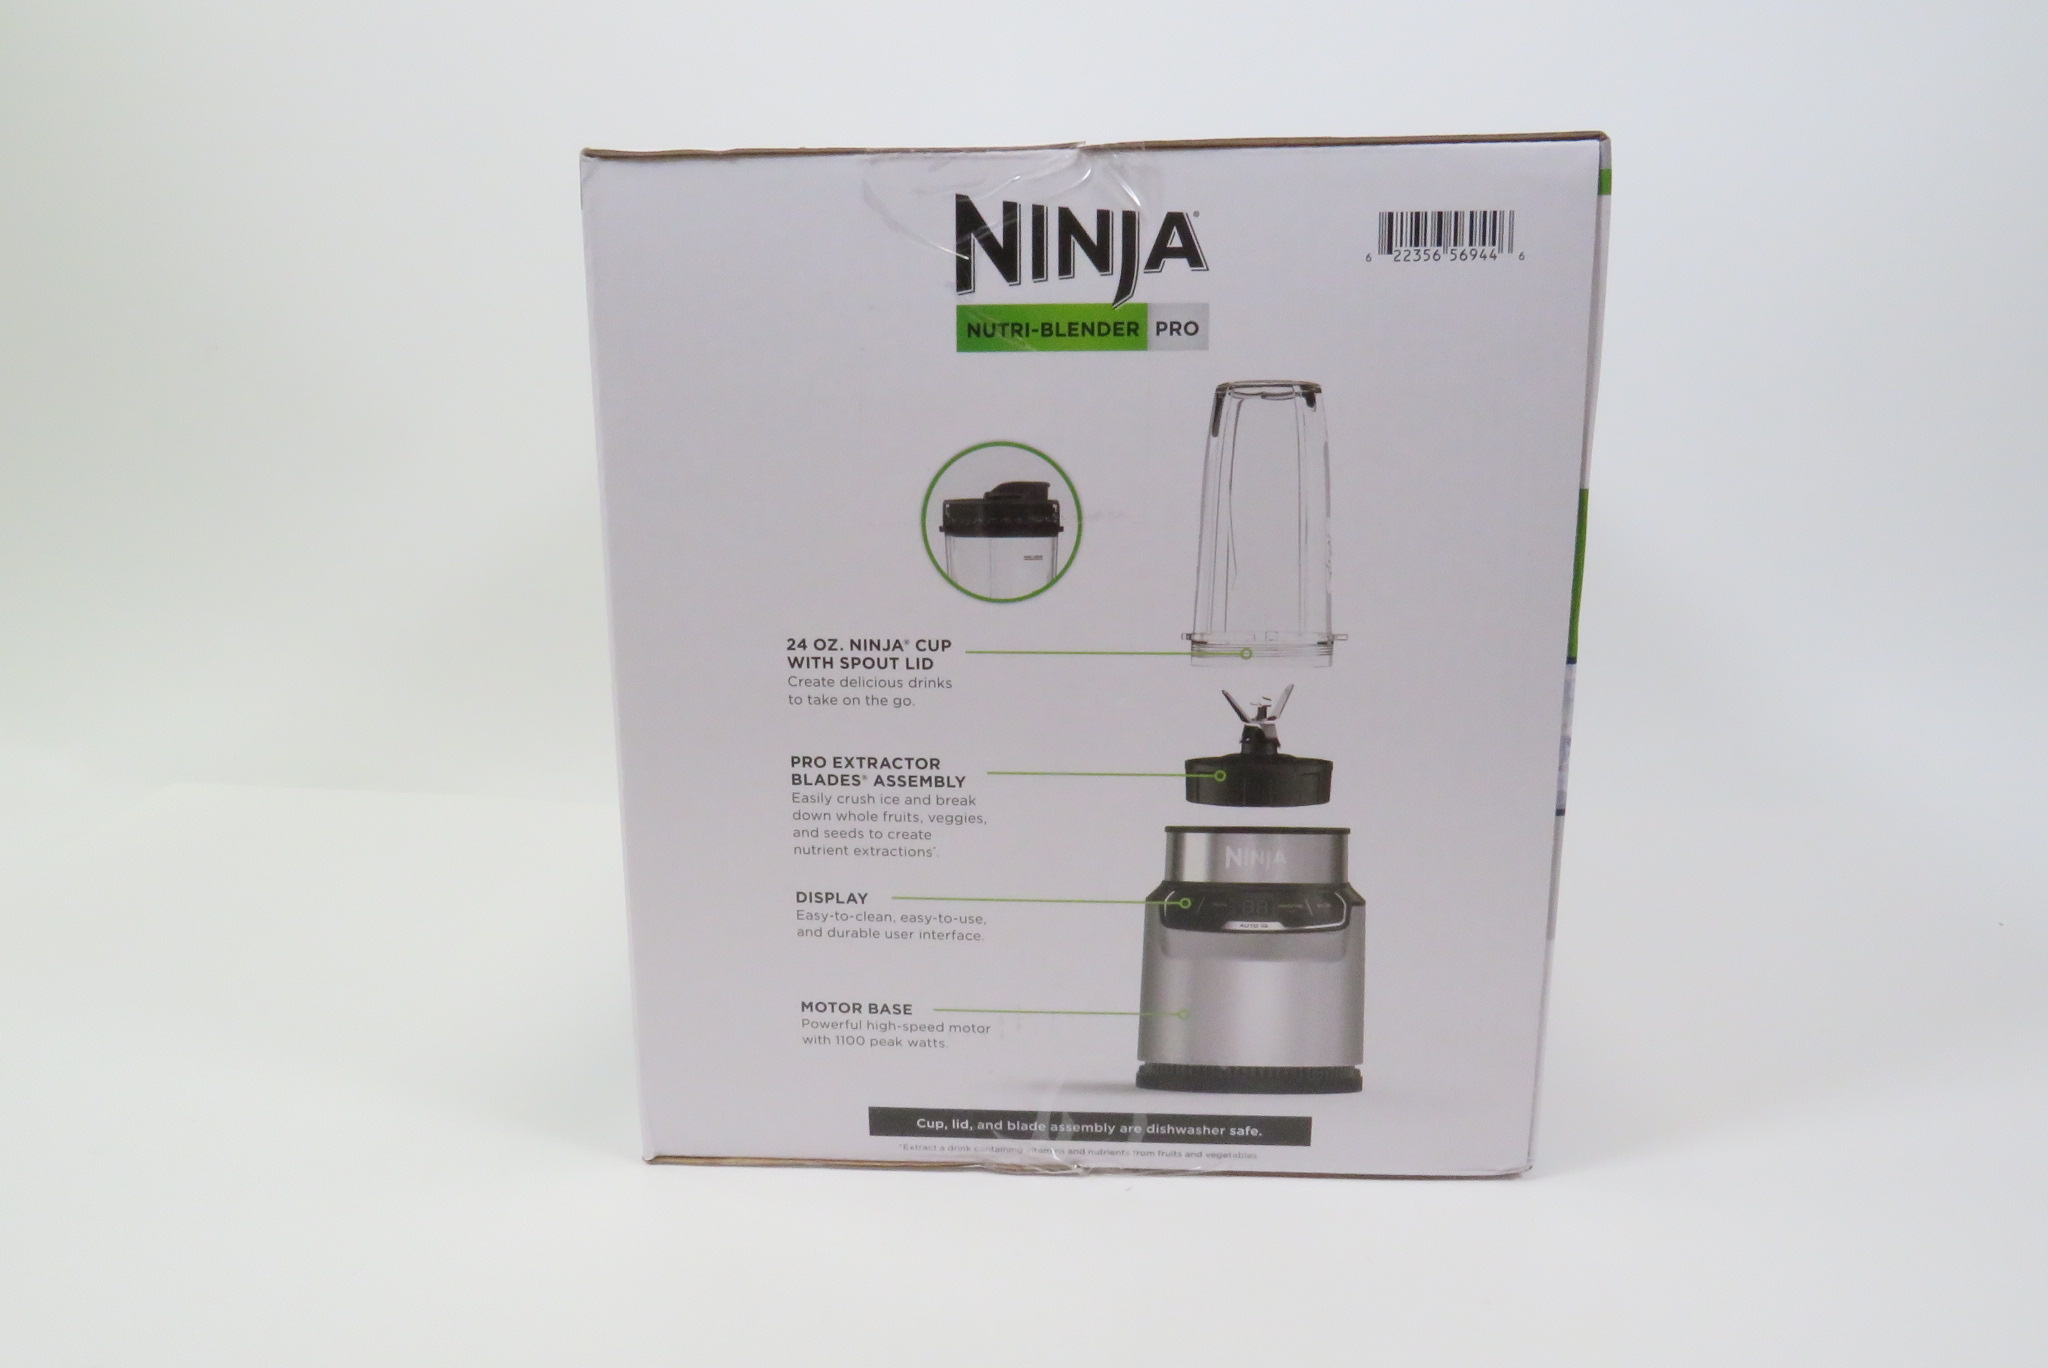 Ninja Nutri-Blender Pro with Auto-iQ, 1100-Peak-Watt, Personal Blender 